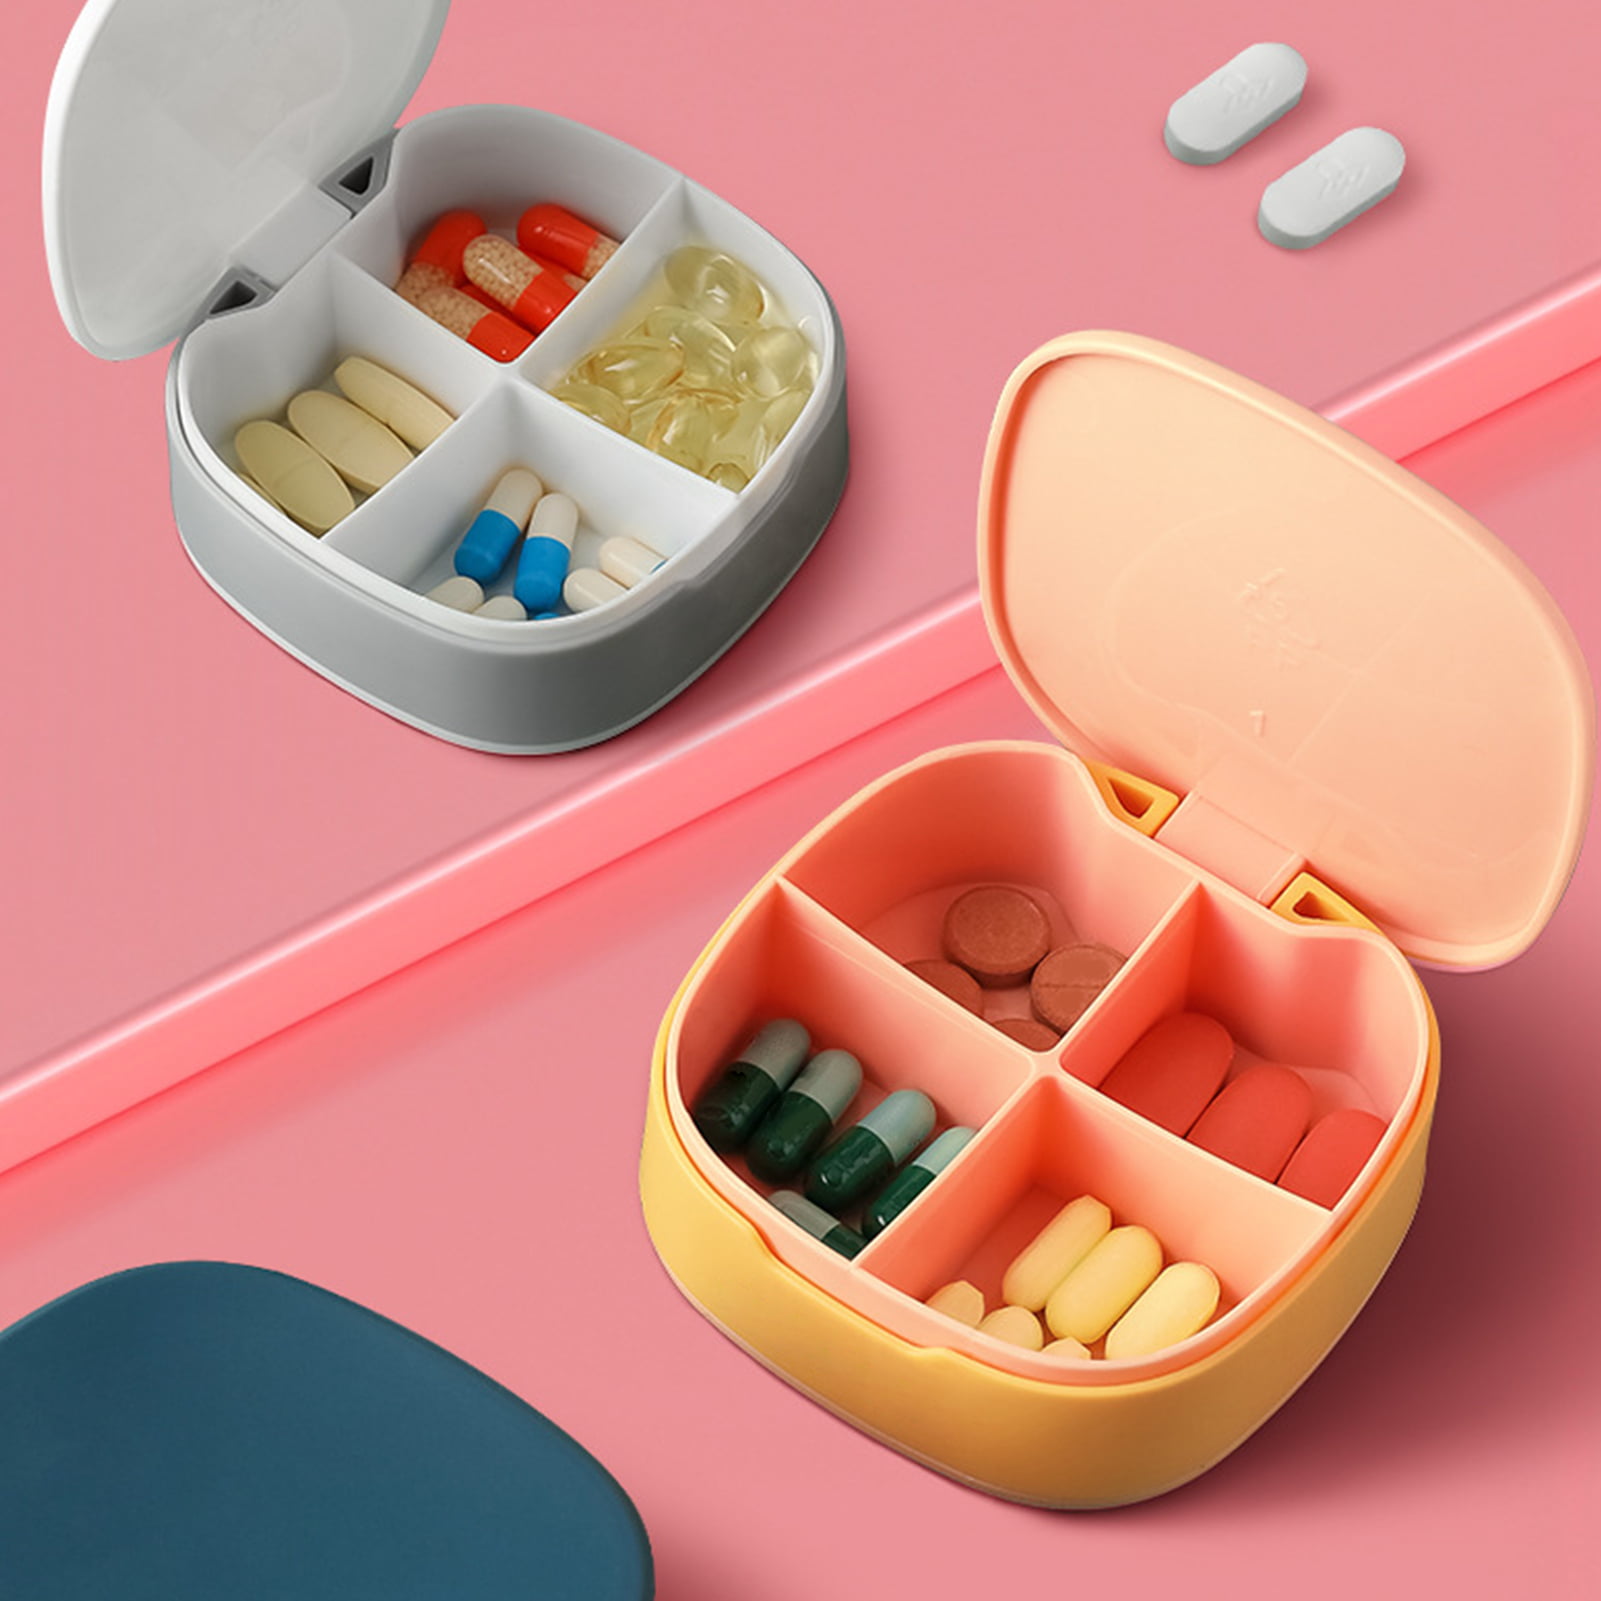 Pill Box Portable Nordic Medicine Tablet Storage Holder Dispenser